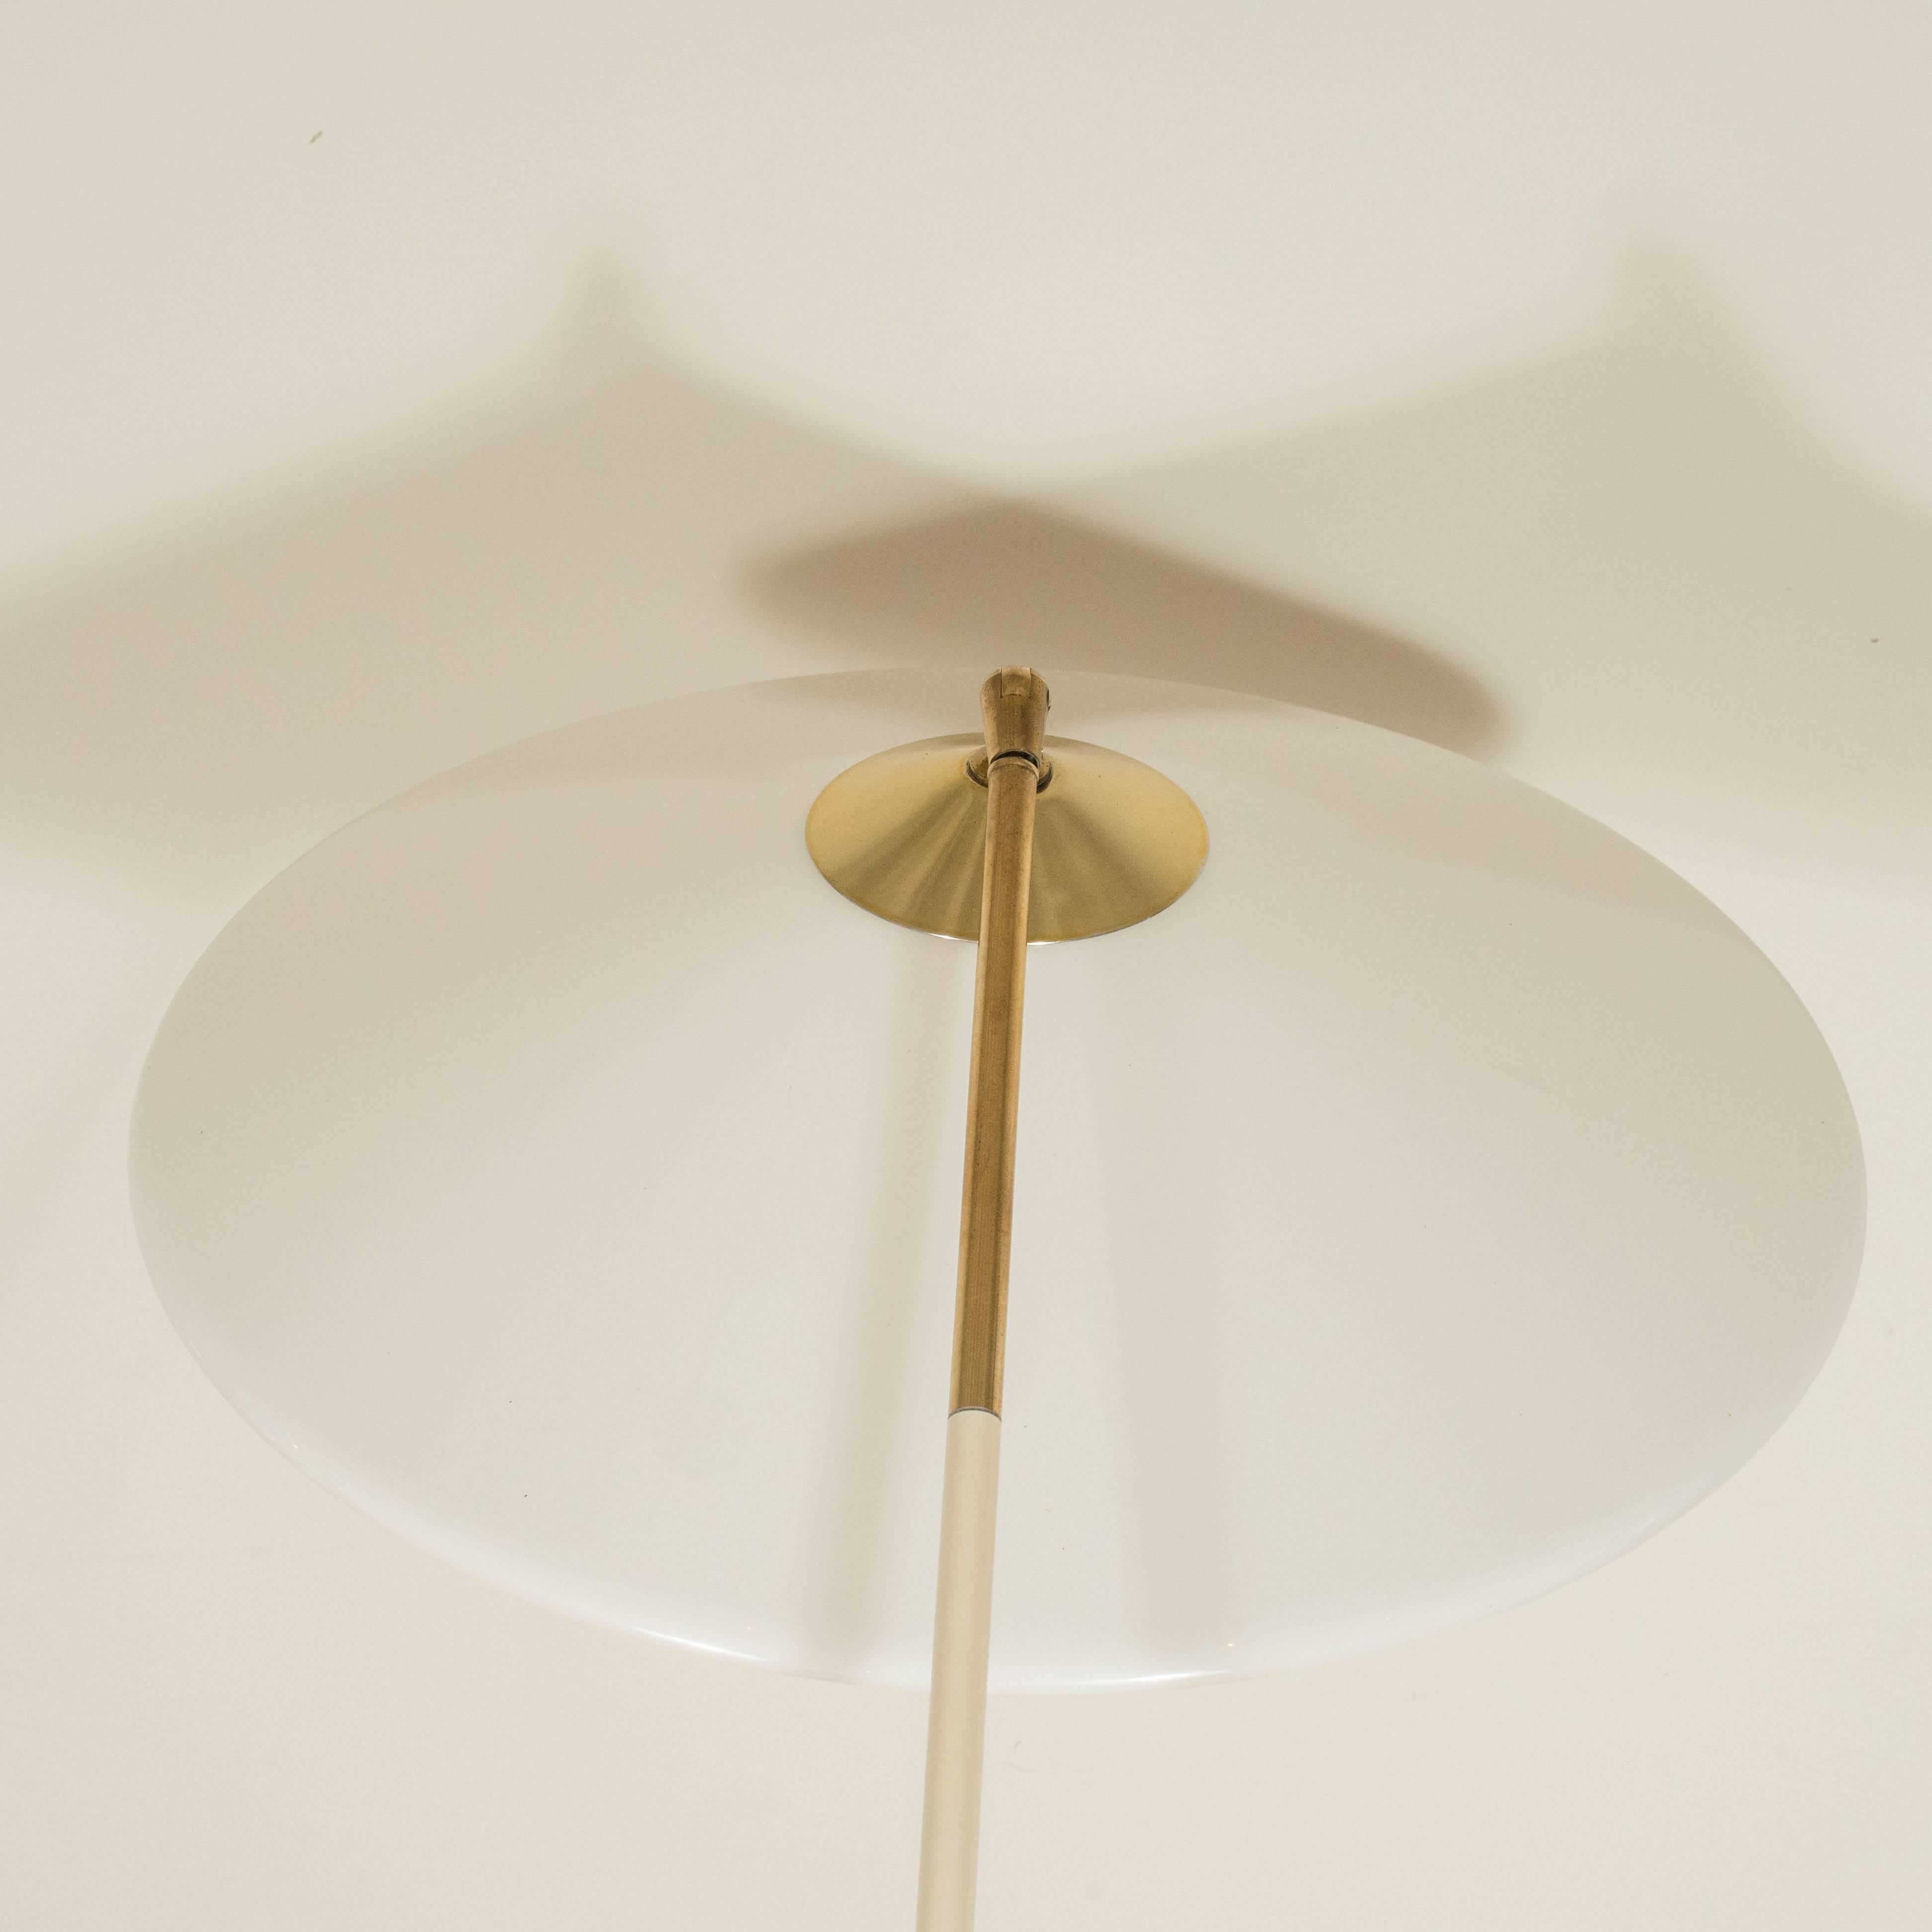 Italian Stilux Floor Lamp with White Plastic Shade, Italy